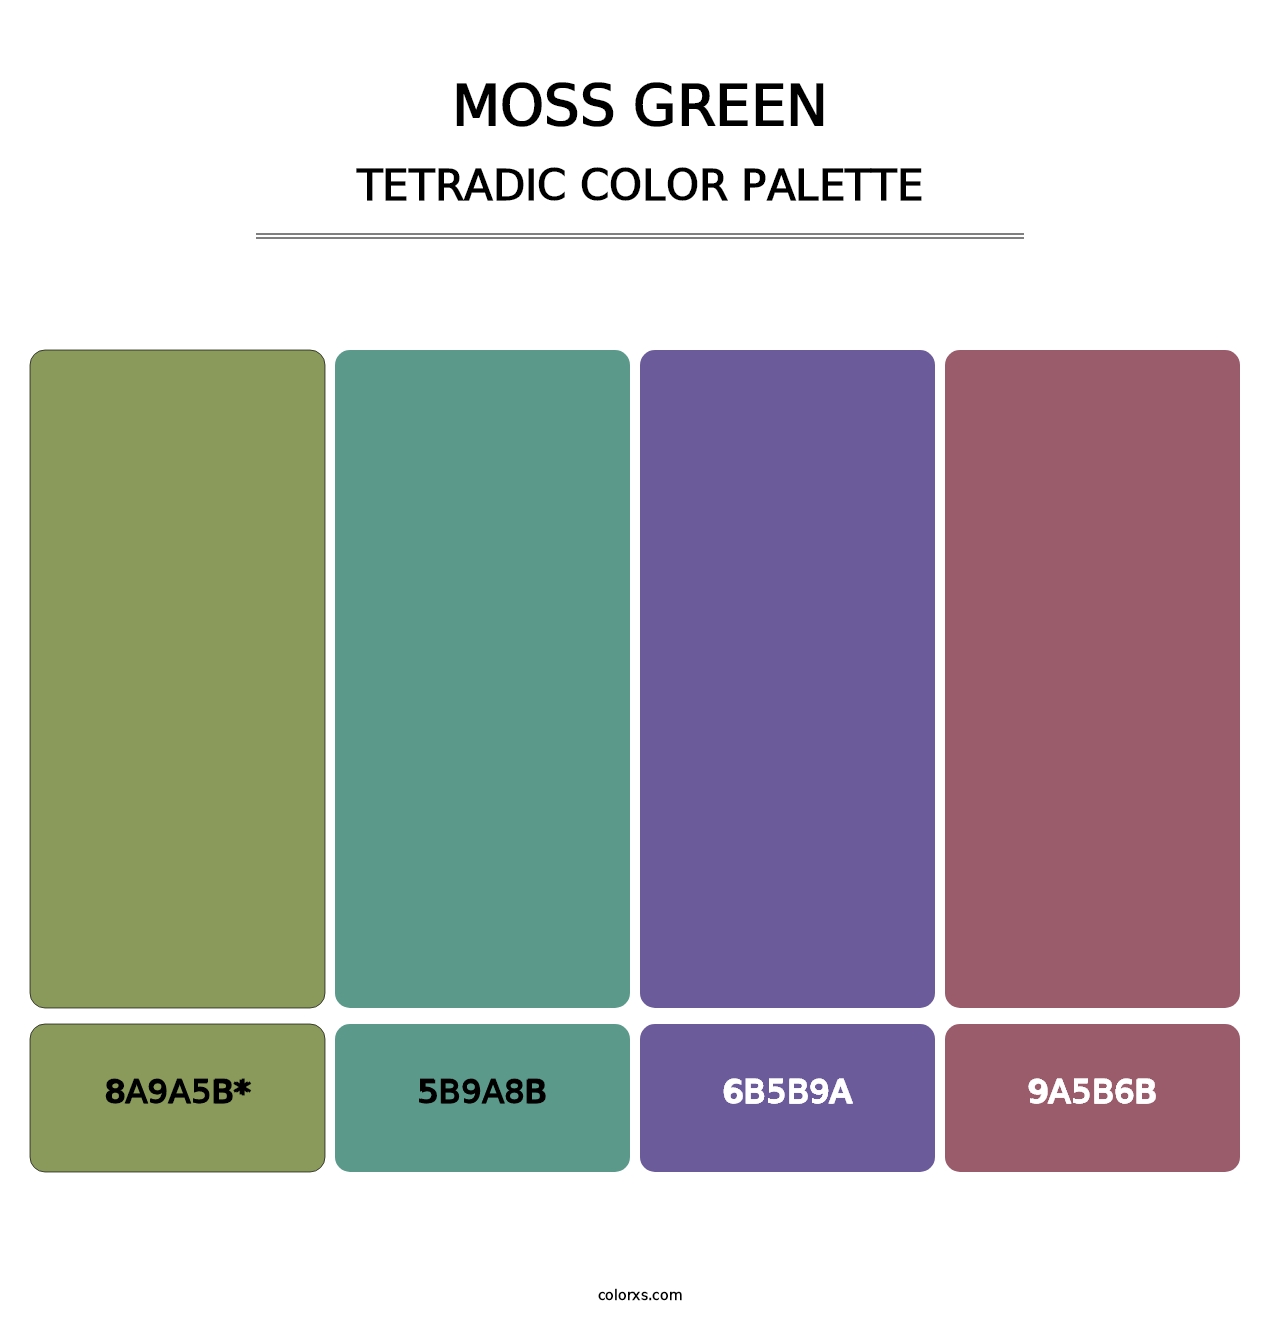 Moss Green - Tetradic Color Palette